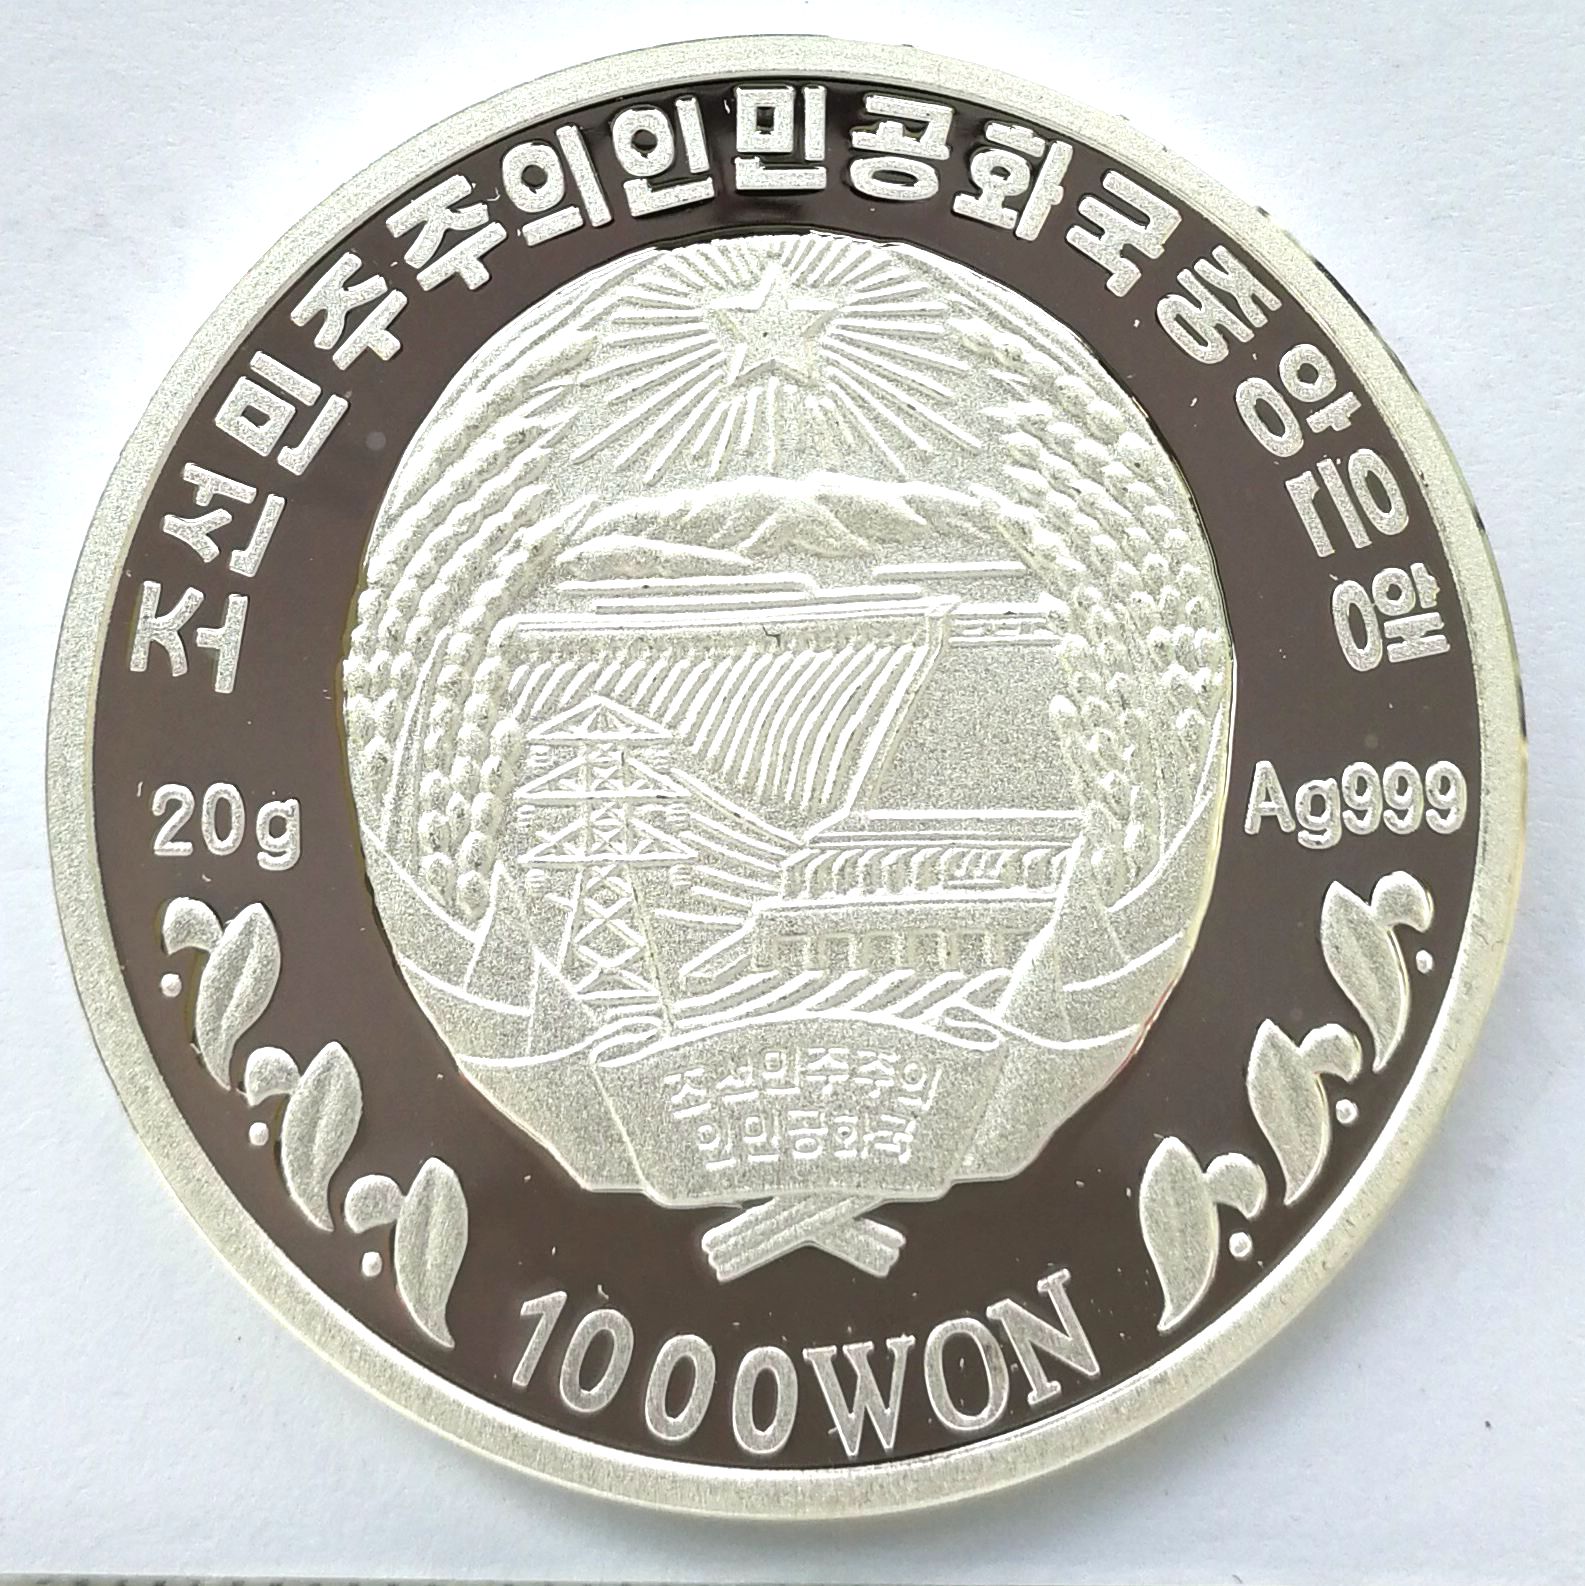 L3428, Korea "International Polar Year" Silver Coin. 2007-2008 Map